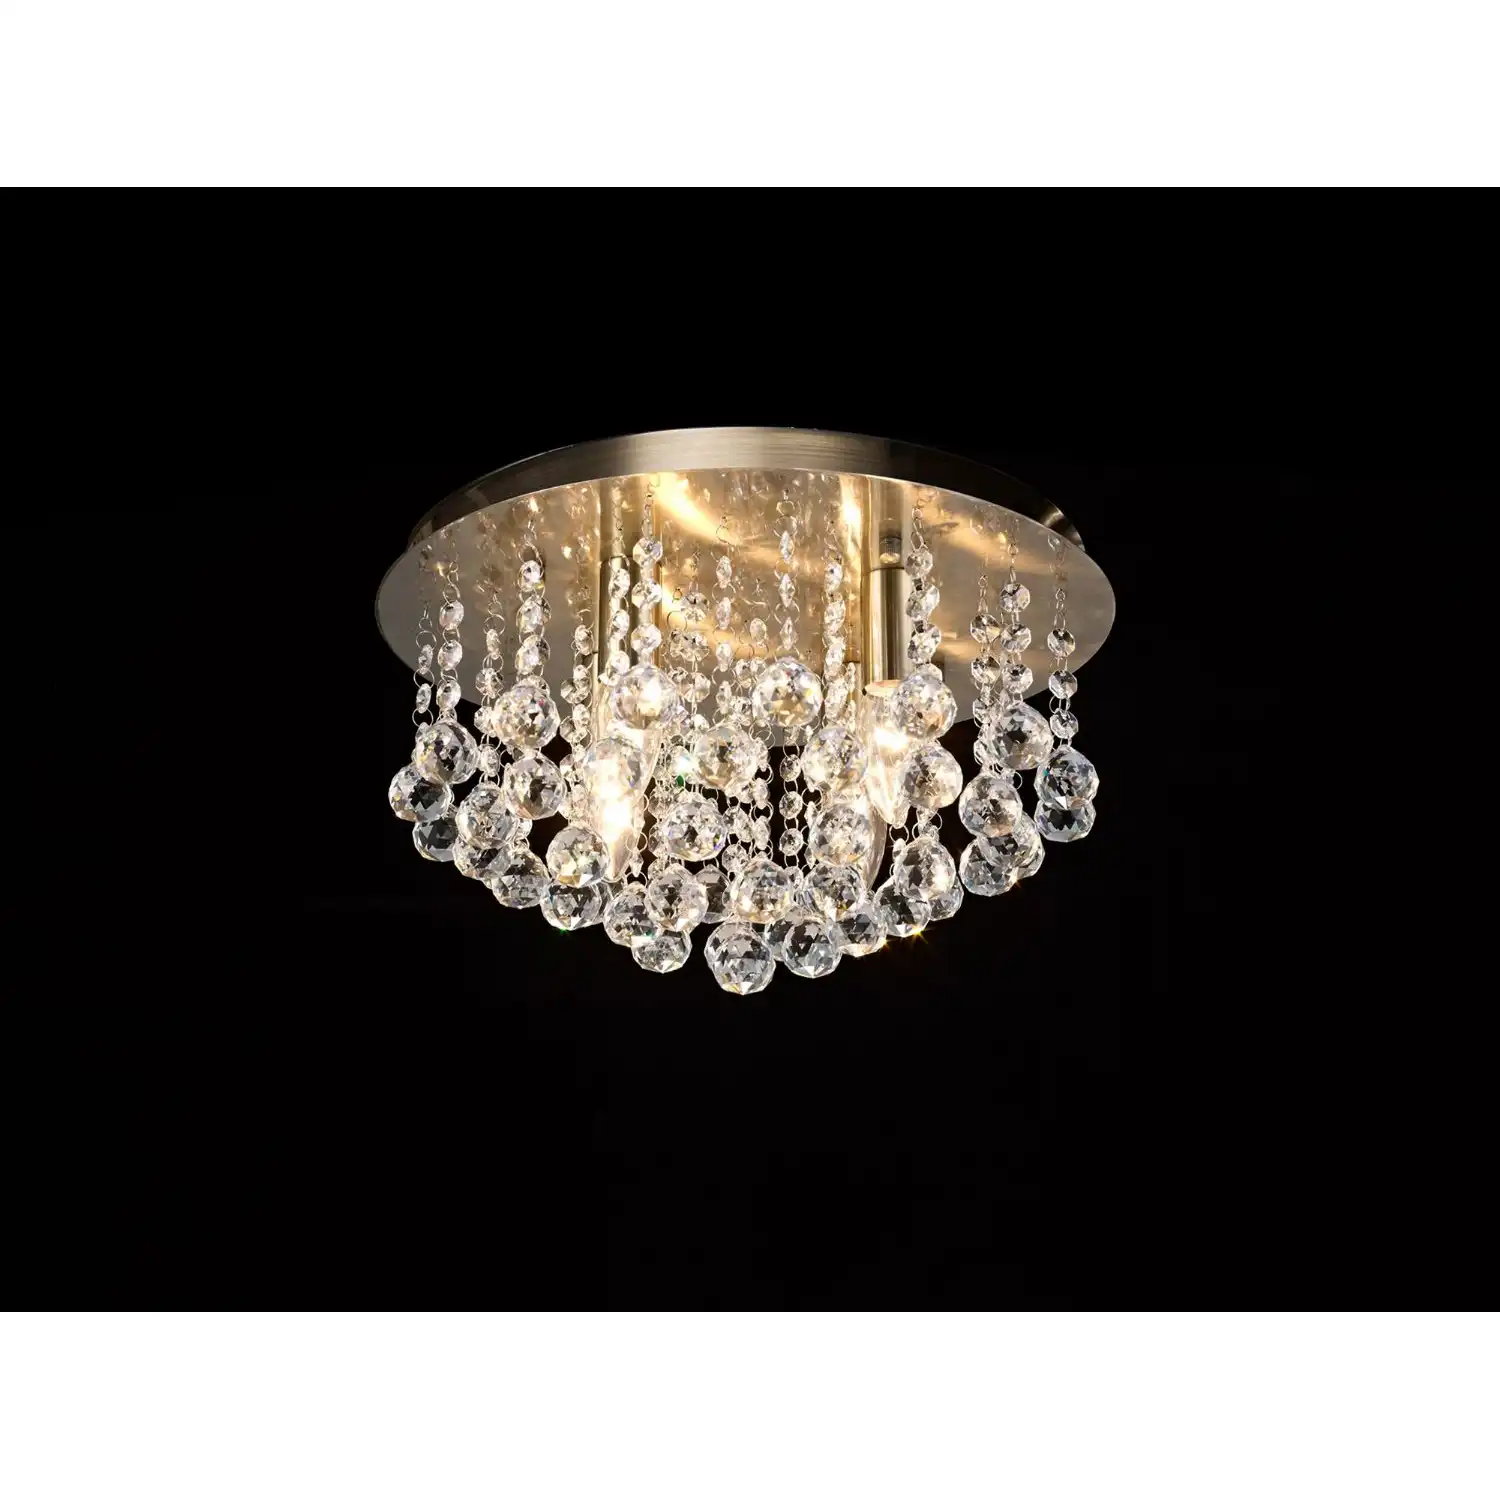 Acton Flush Ceiling 4 Light E14, 380mm Round, Antique Brass Sphere Crystal